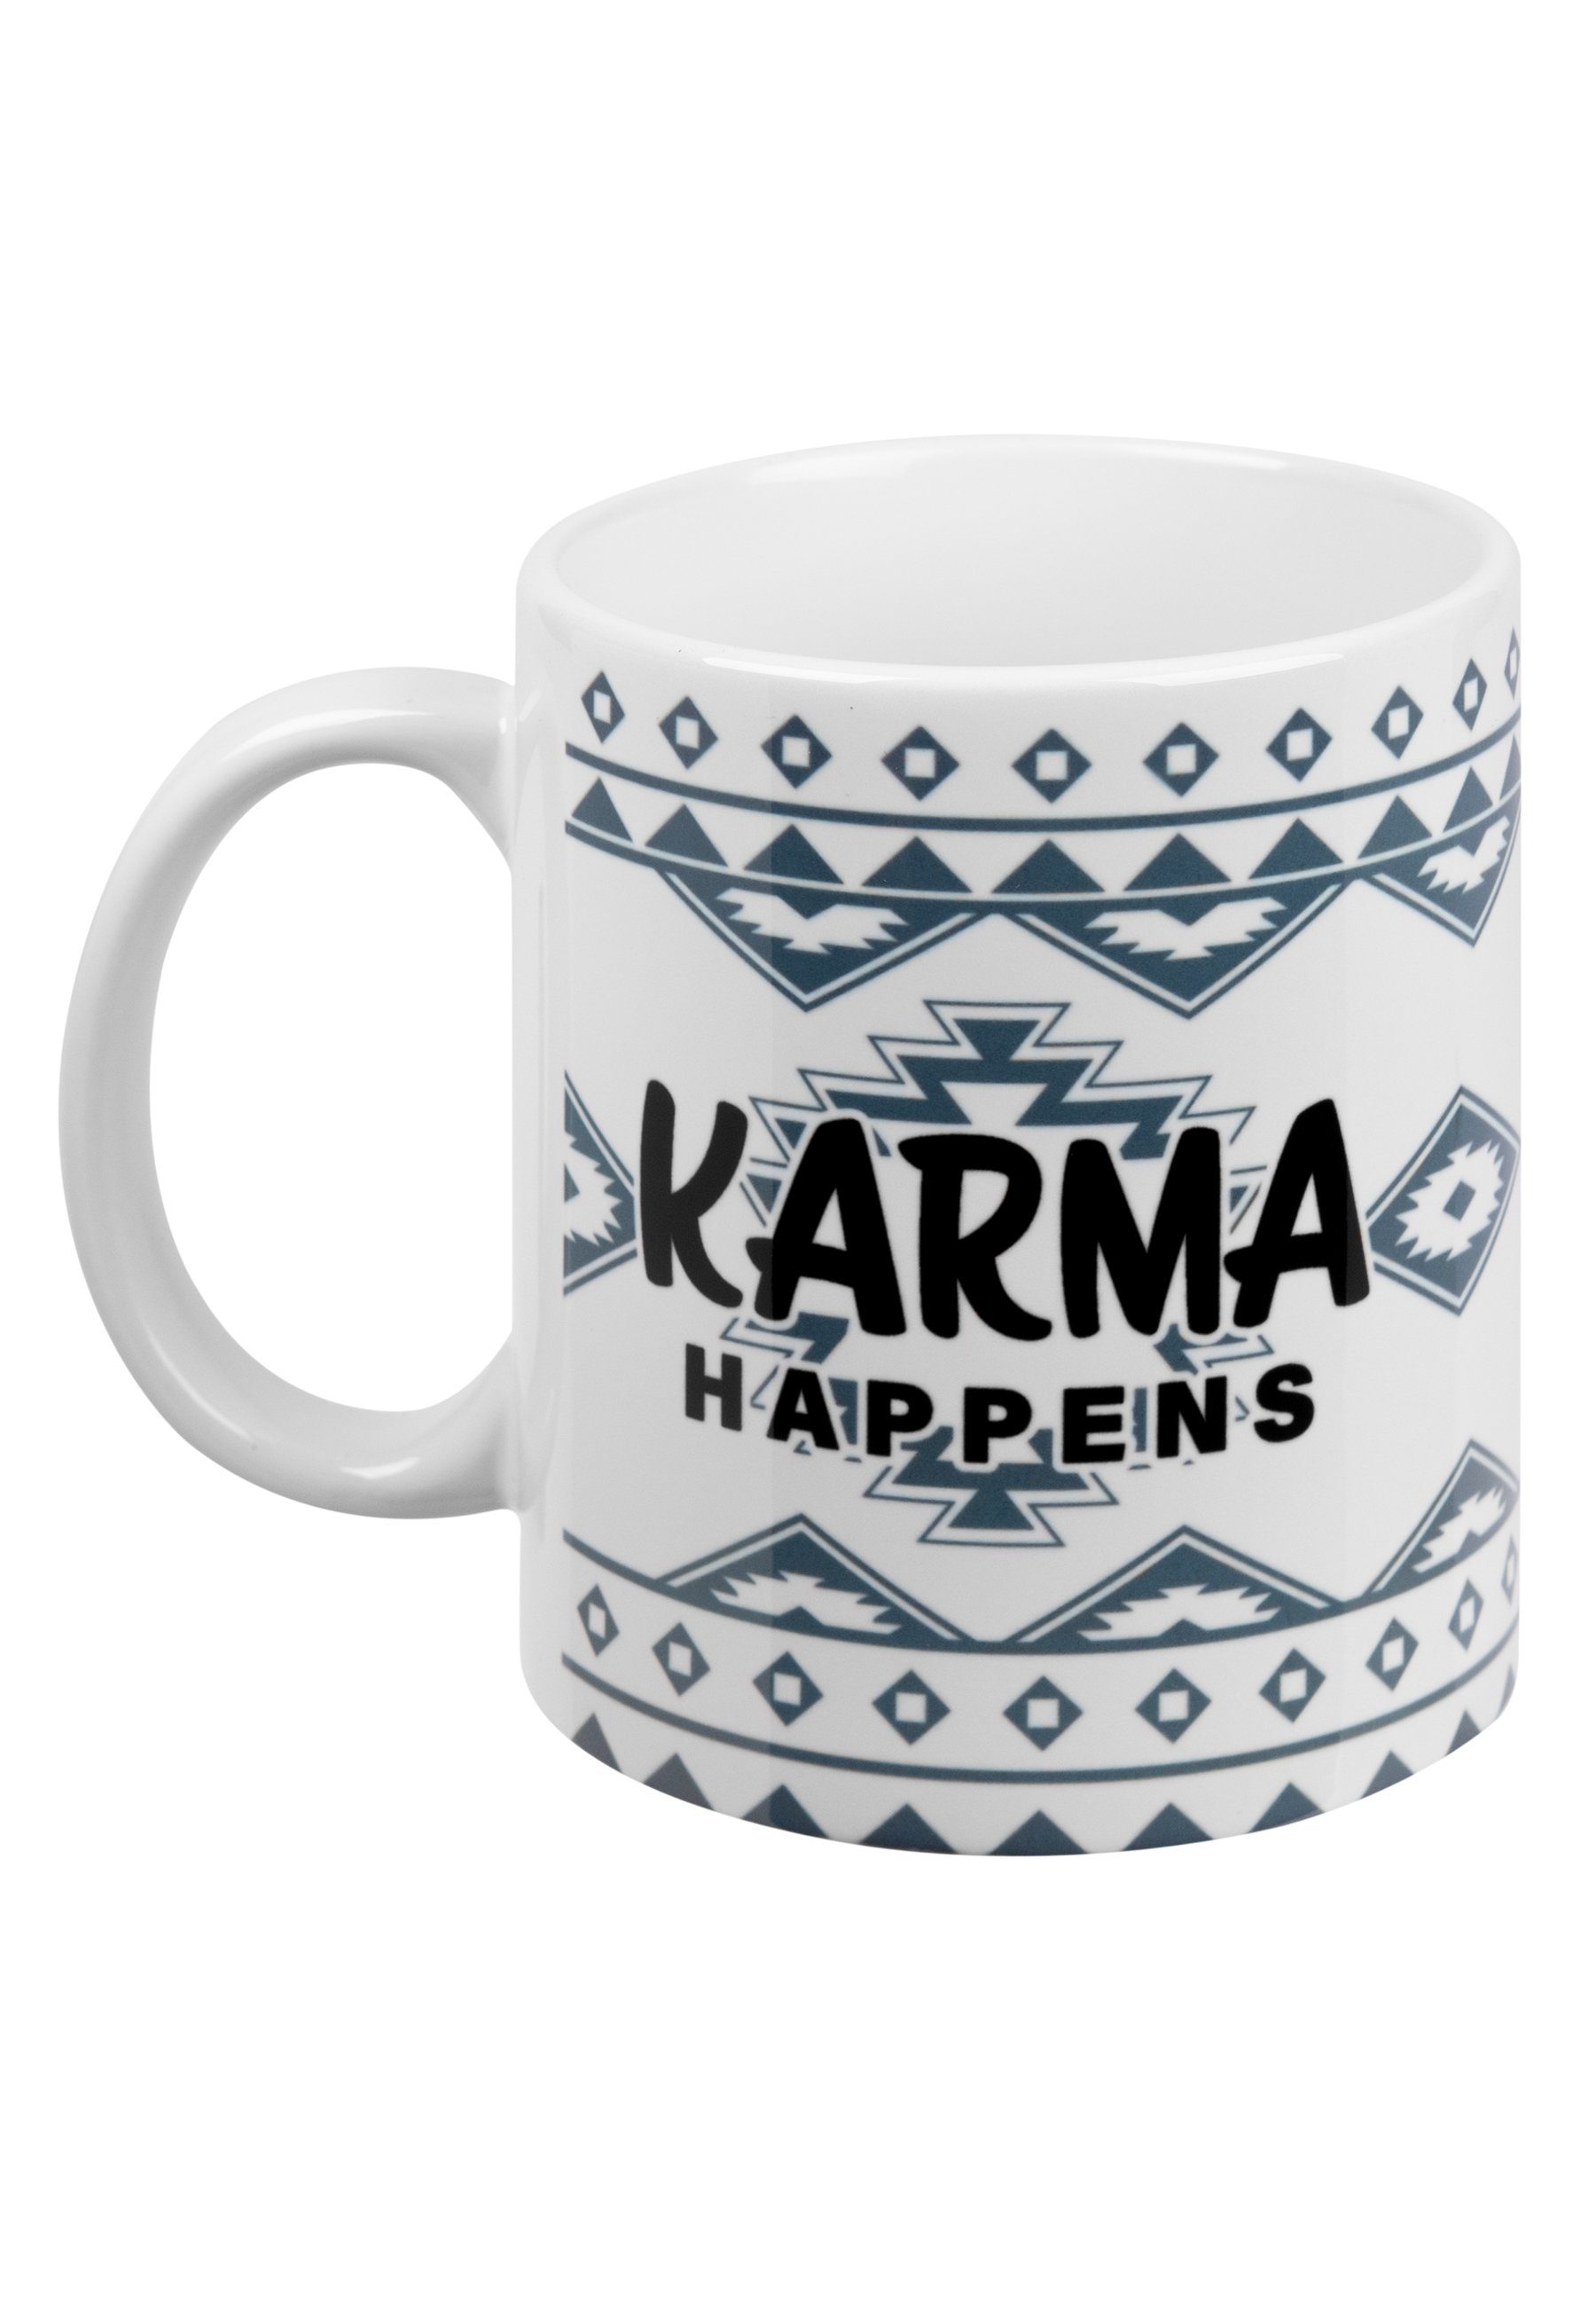 Labels® Karma Tasse happens Tasse Becher Kaffeetasse Keramik Weiß Keramik - 320ml, Karma United